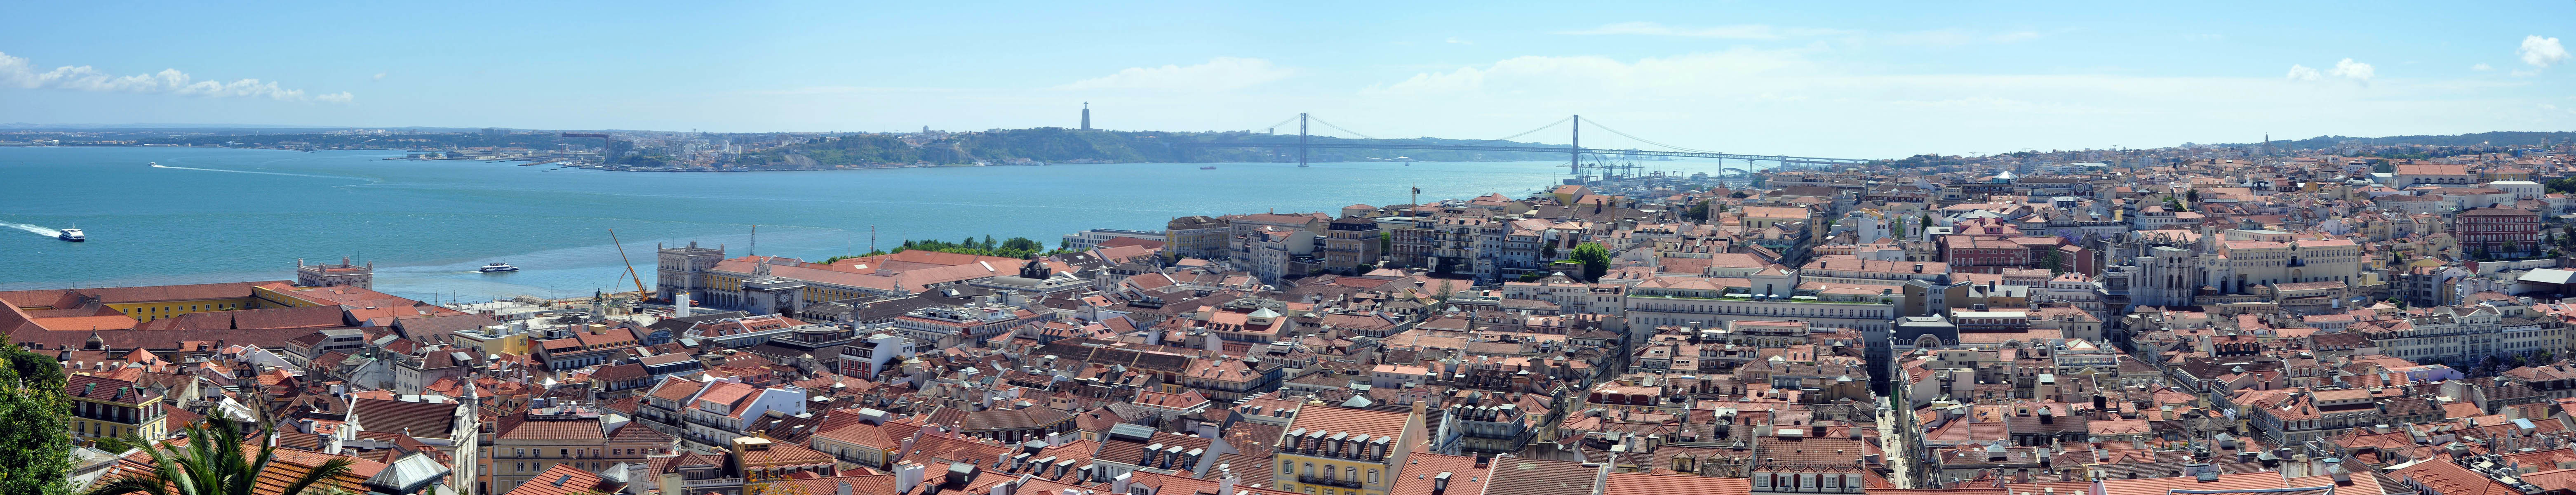 Lisbon - Portugal6.jpg